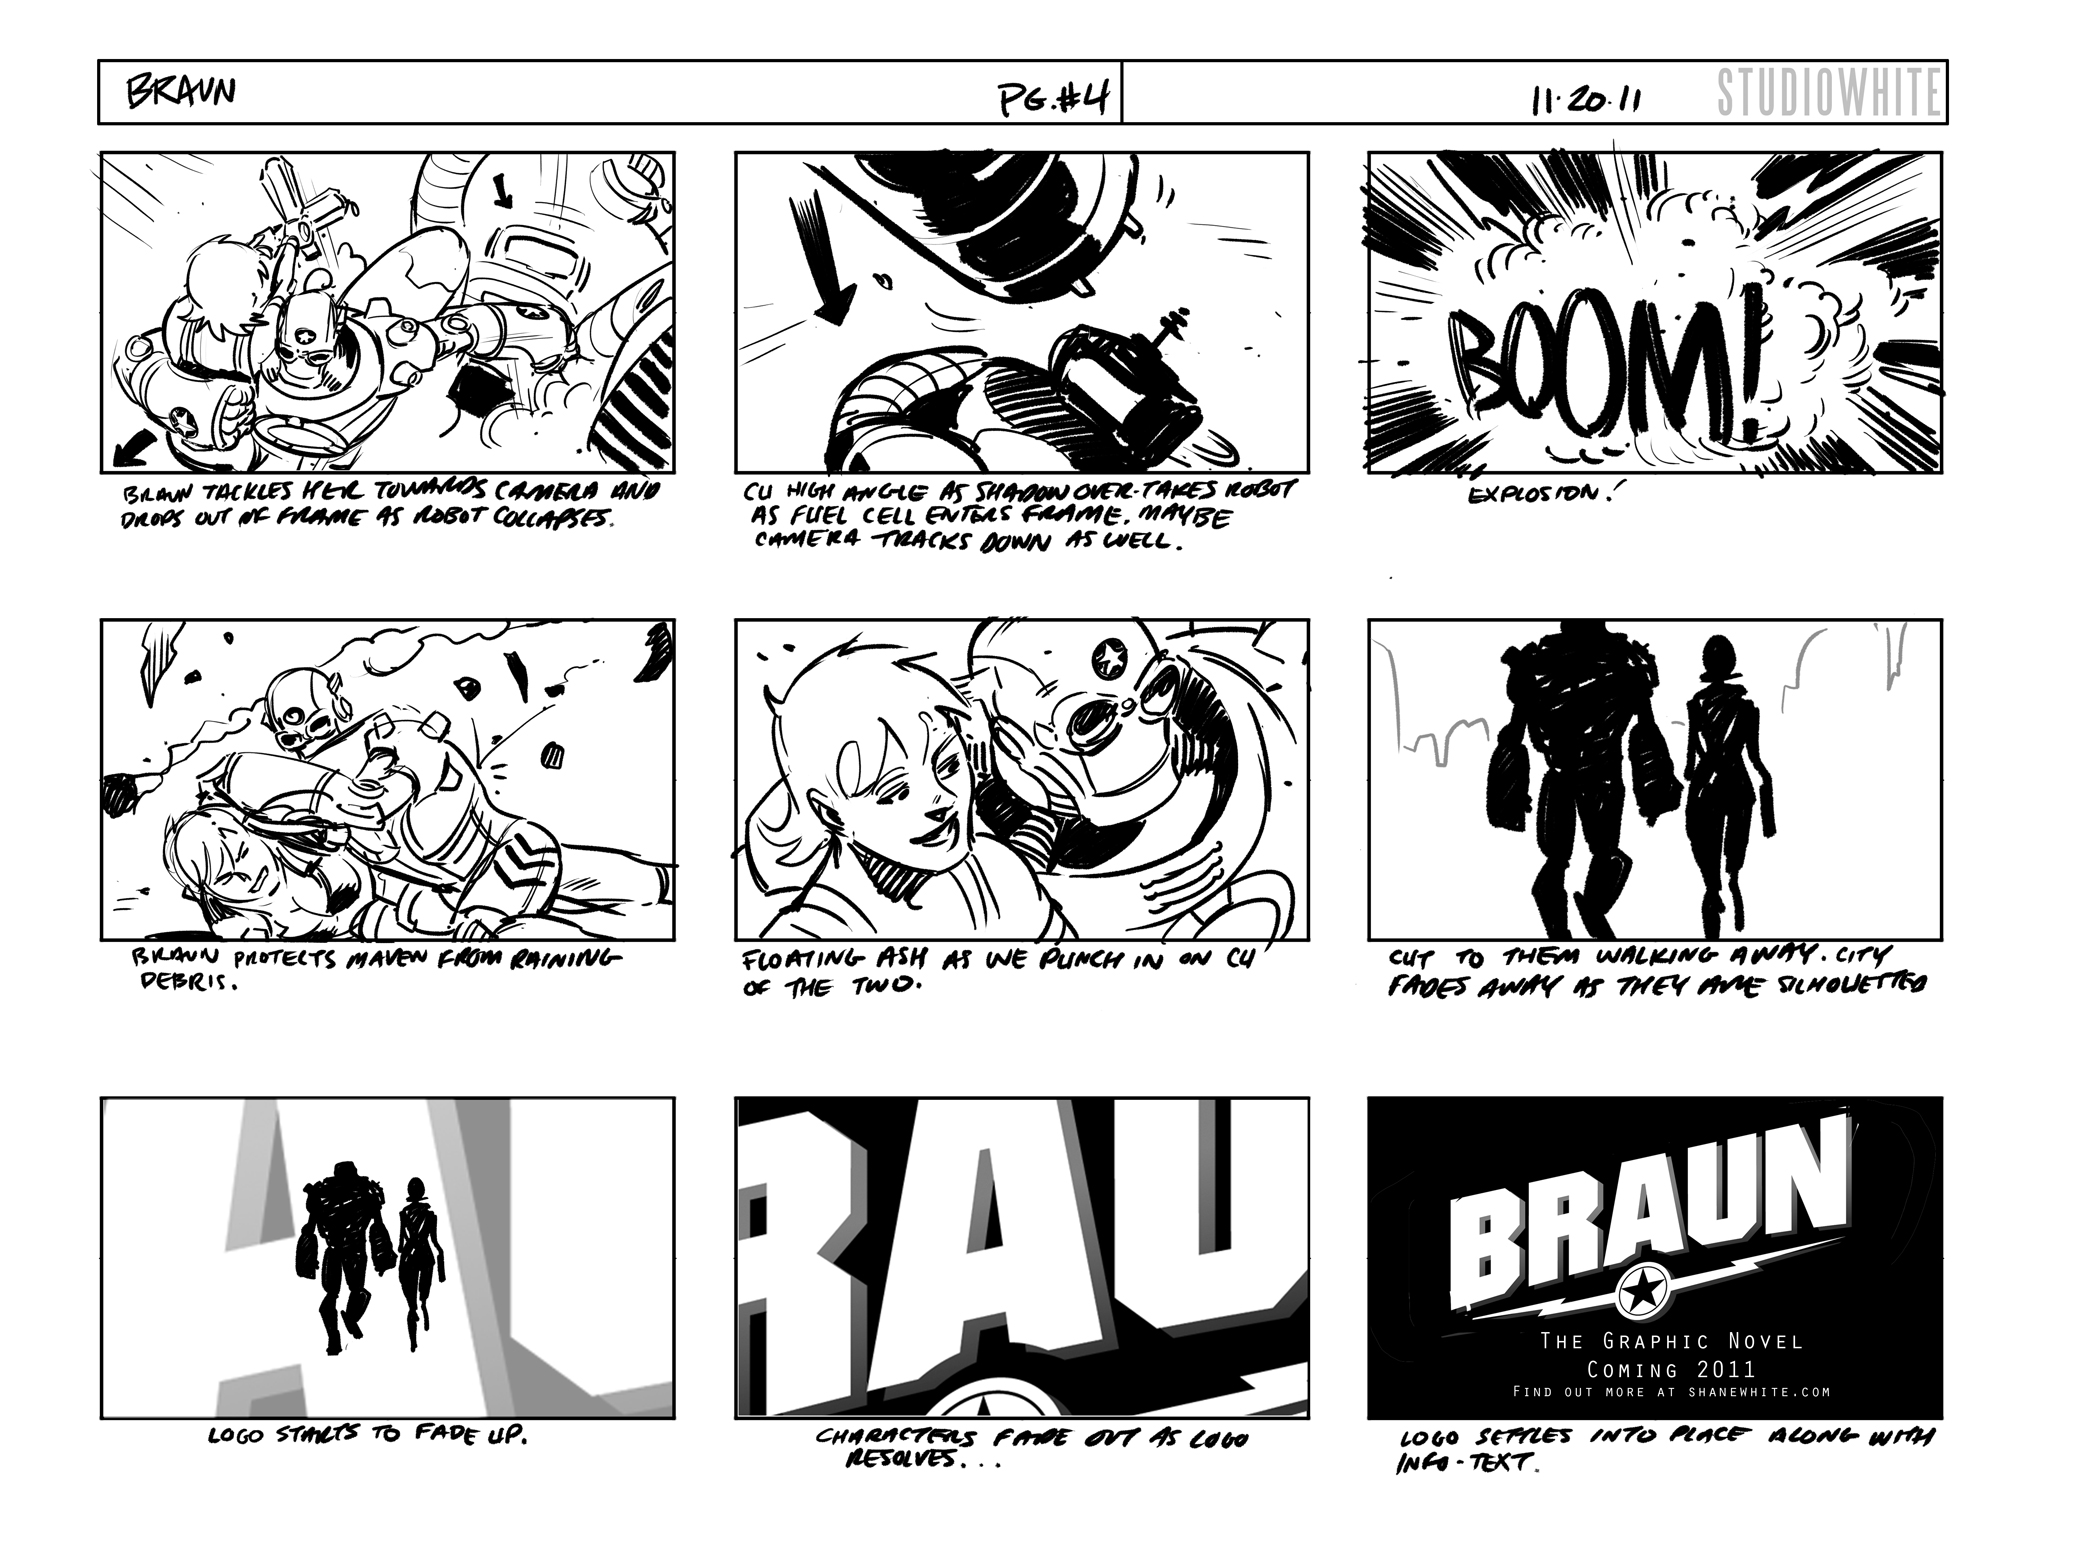 "Shane White" "Braun" "storyboard" "animation"